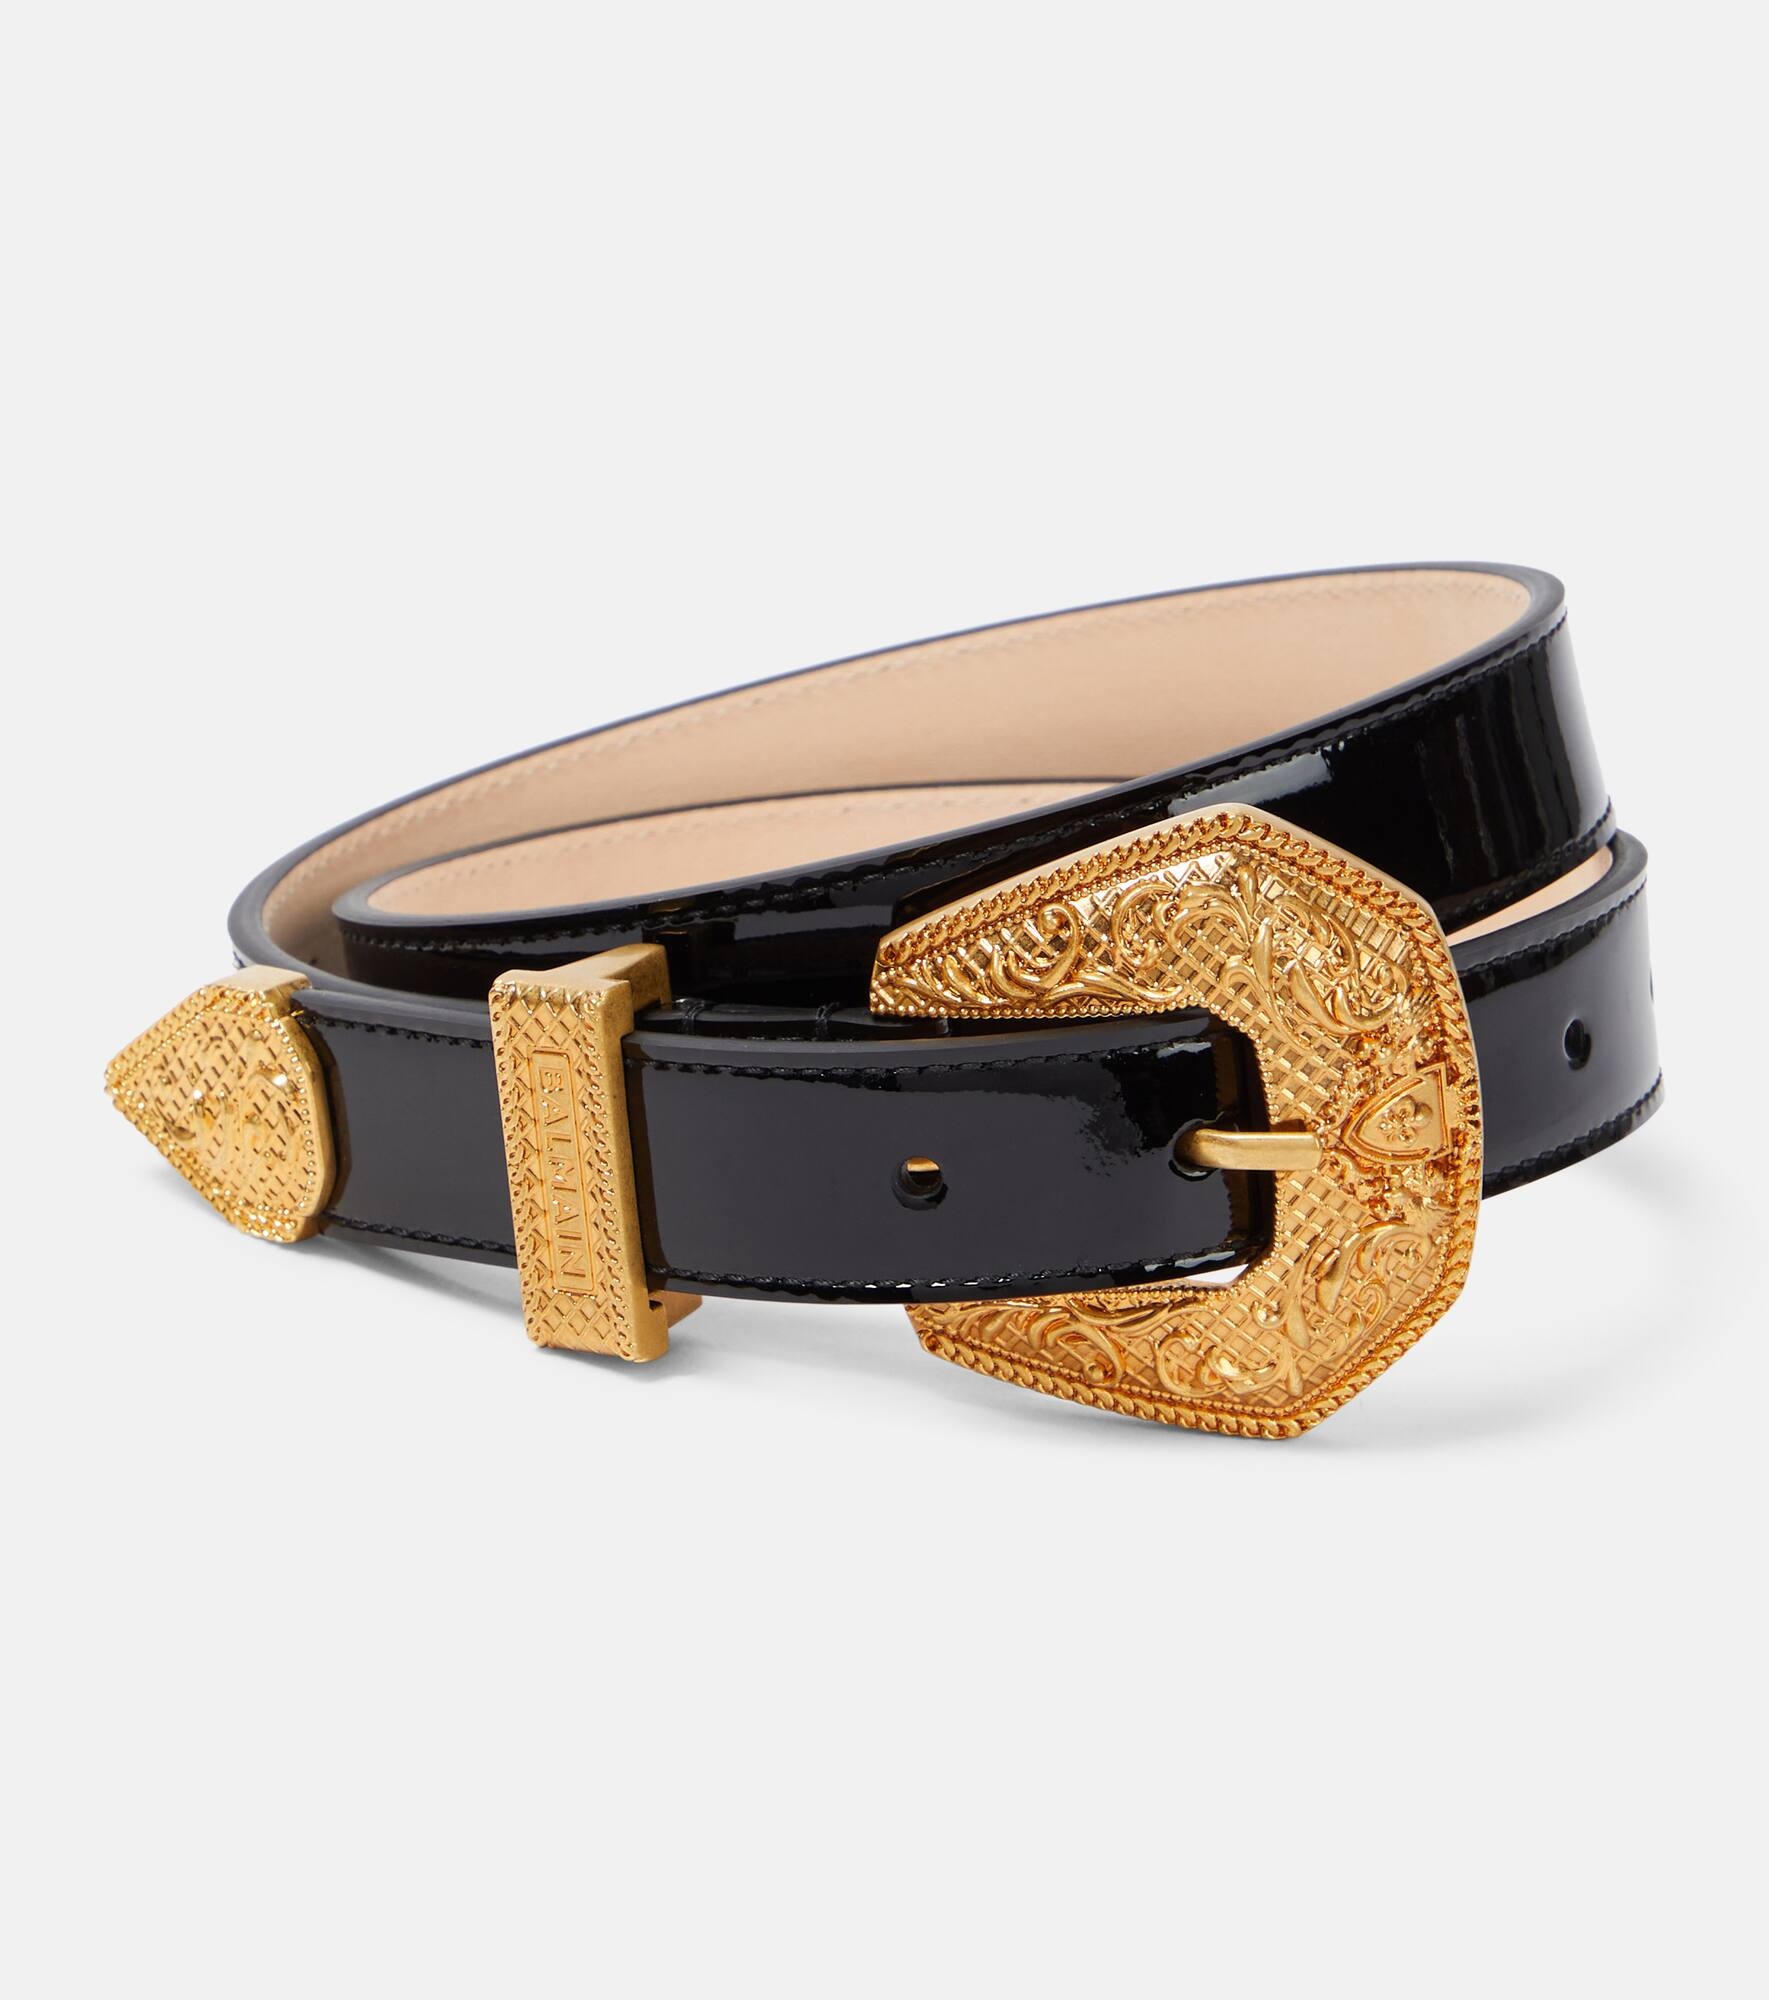 Patent leather belt - 1